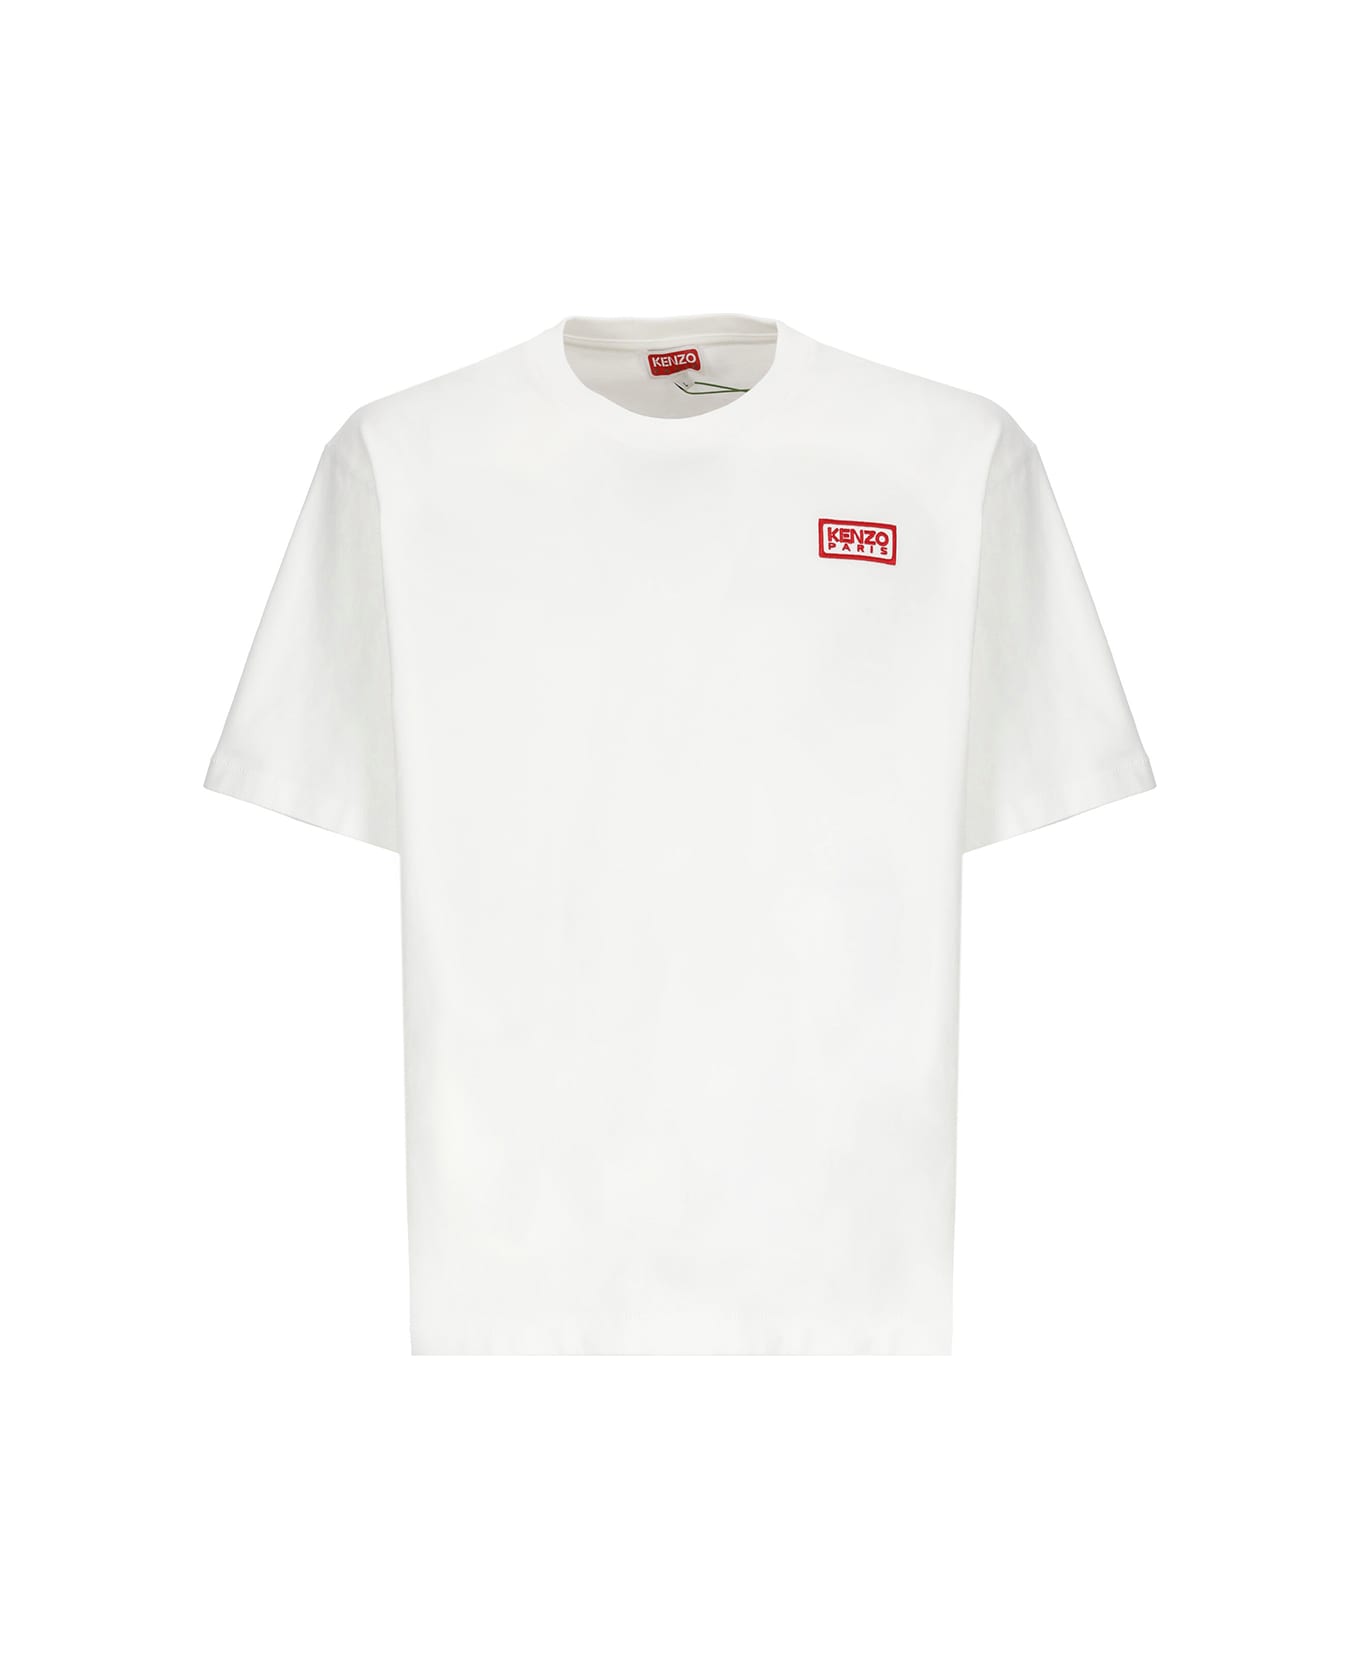 Kenzo T-shirt - White シャツ